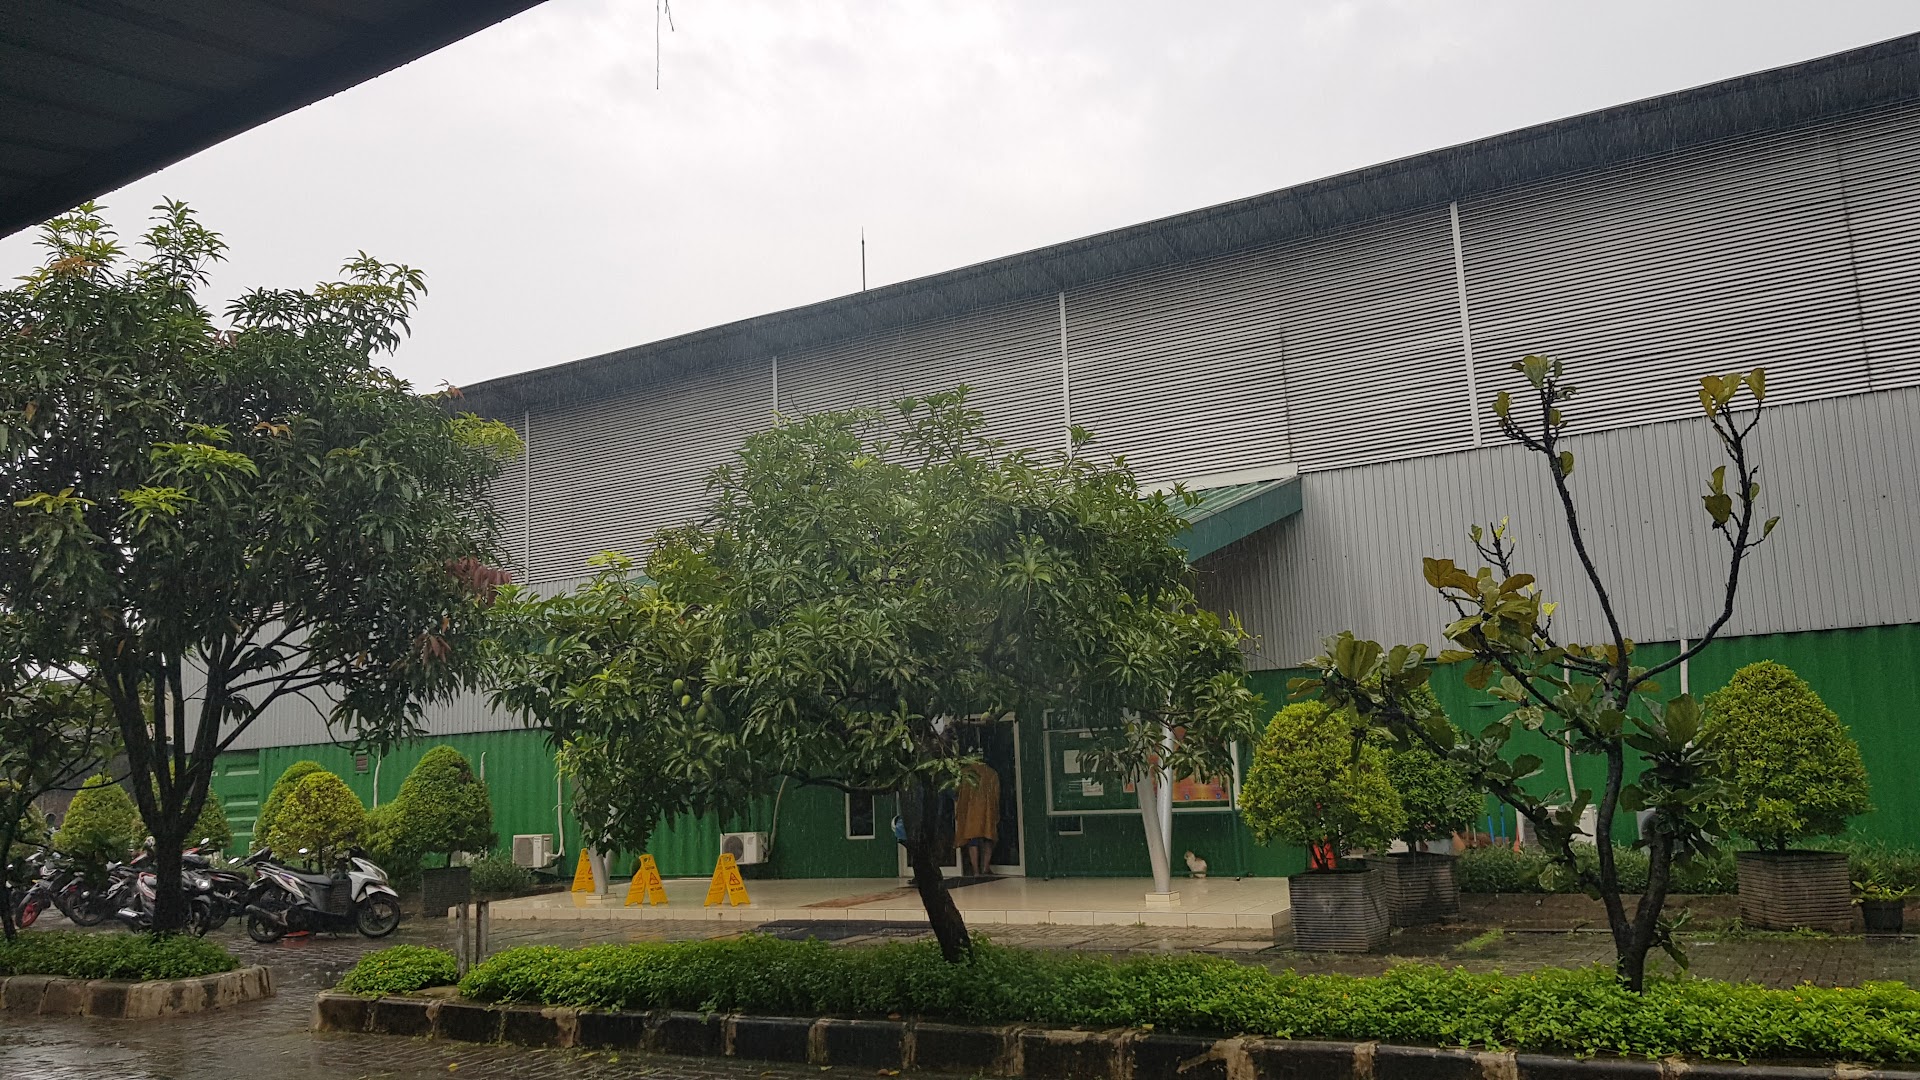 Kantor Pelayanan Lalu Lintas Pt Jakarta Lingkar Barat Satu - Jorr W1 Photo